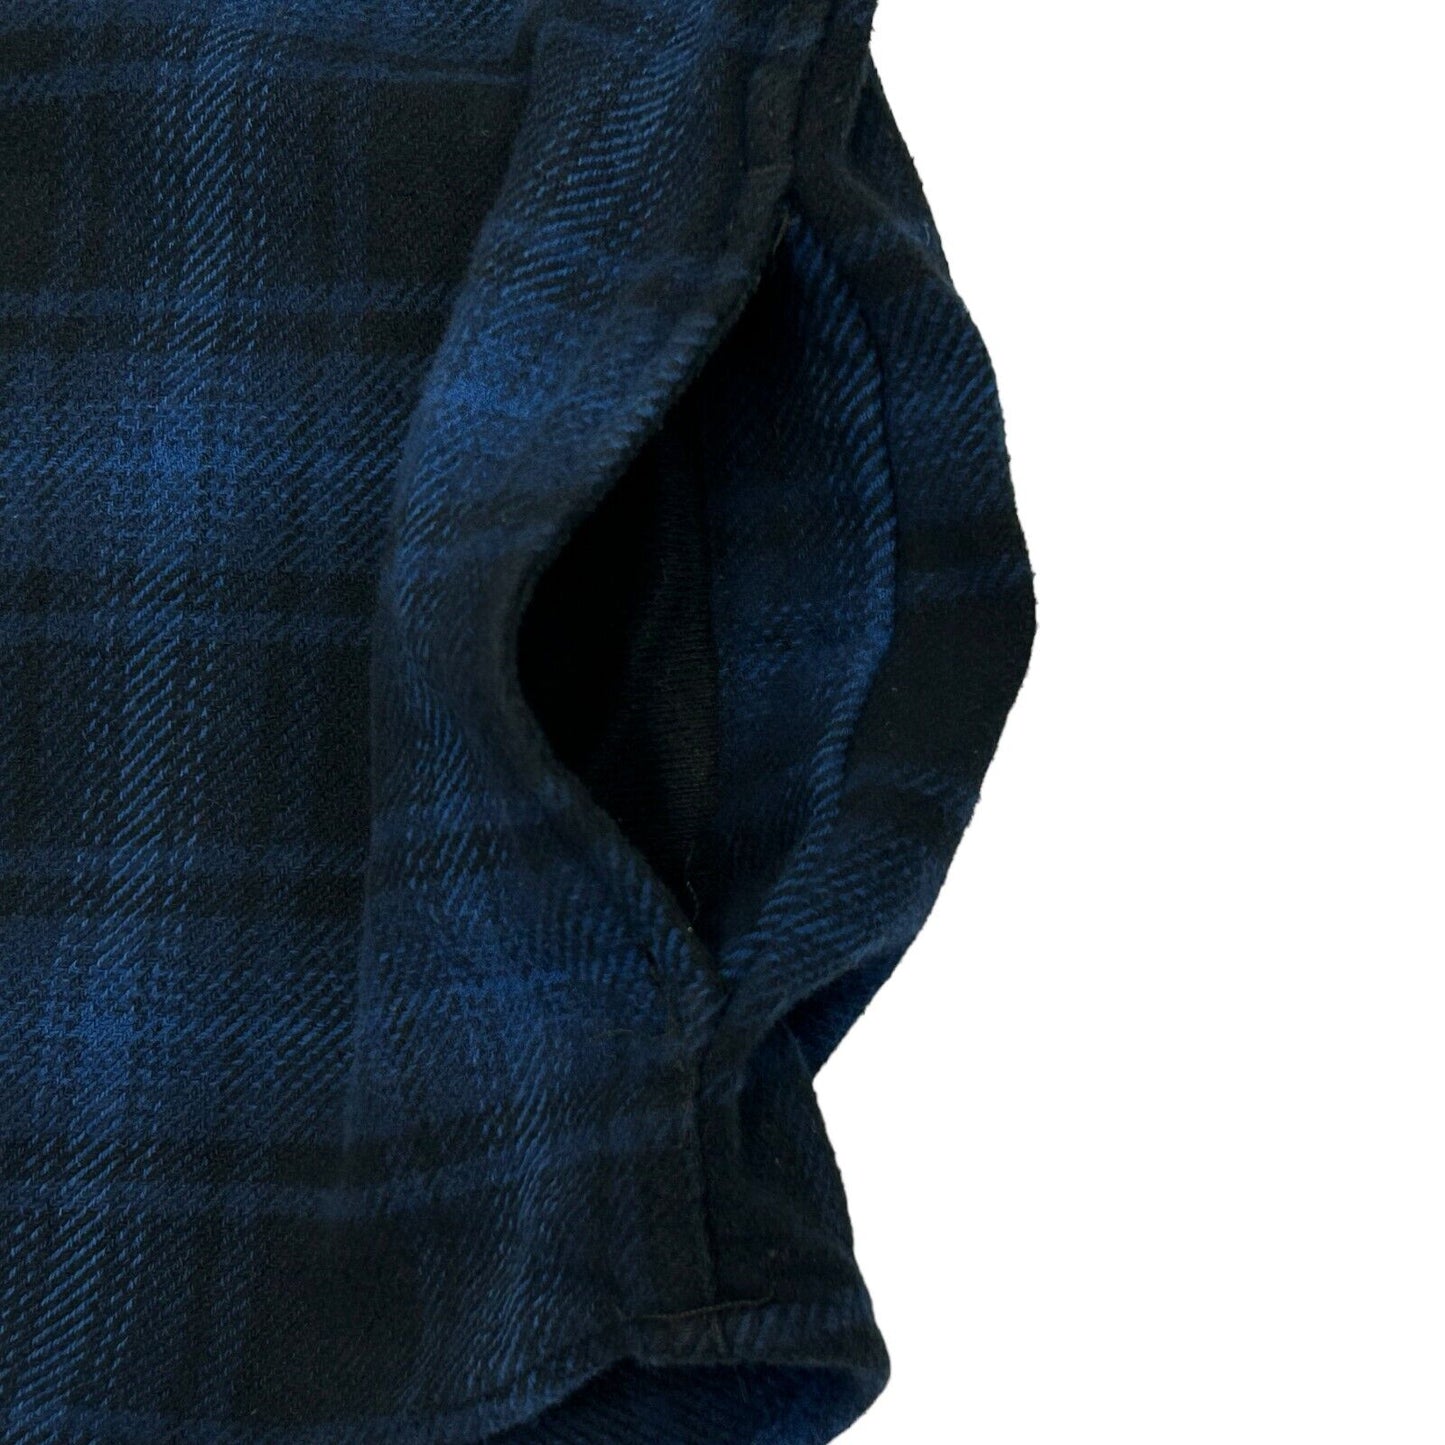 Orvis Blue Plaid Heavyweight Flannel Shirt Jacket Shacket Pockets Long Sleeve XL